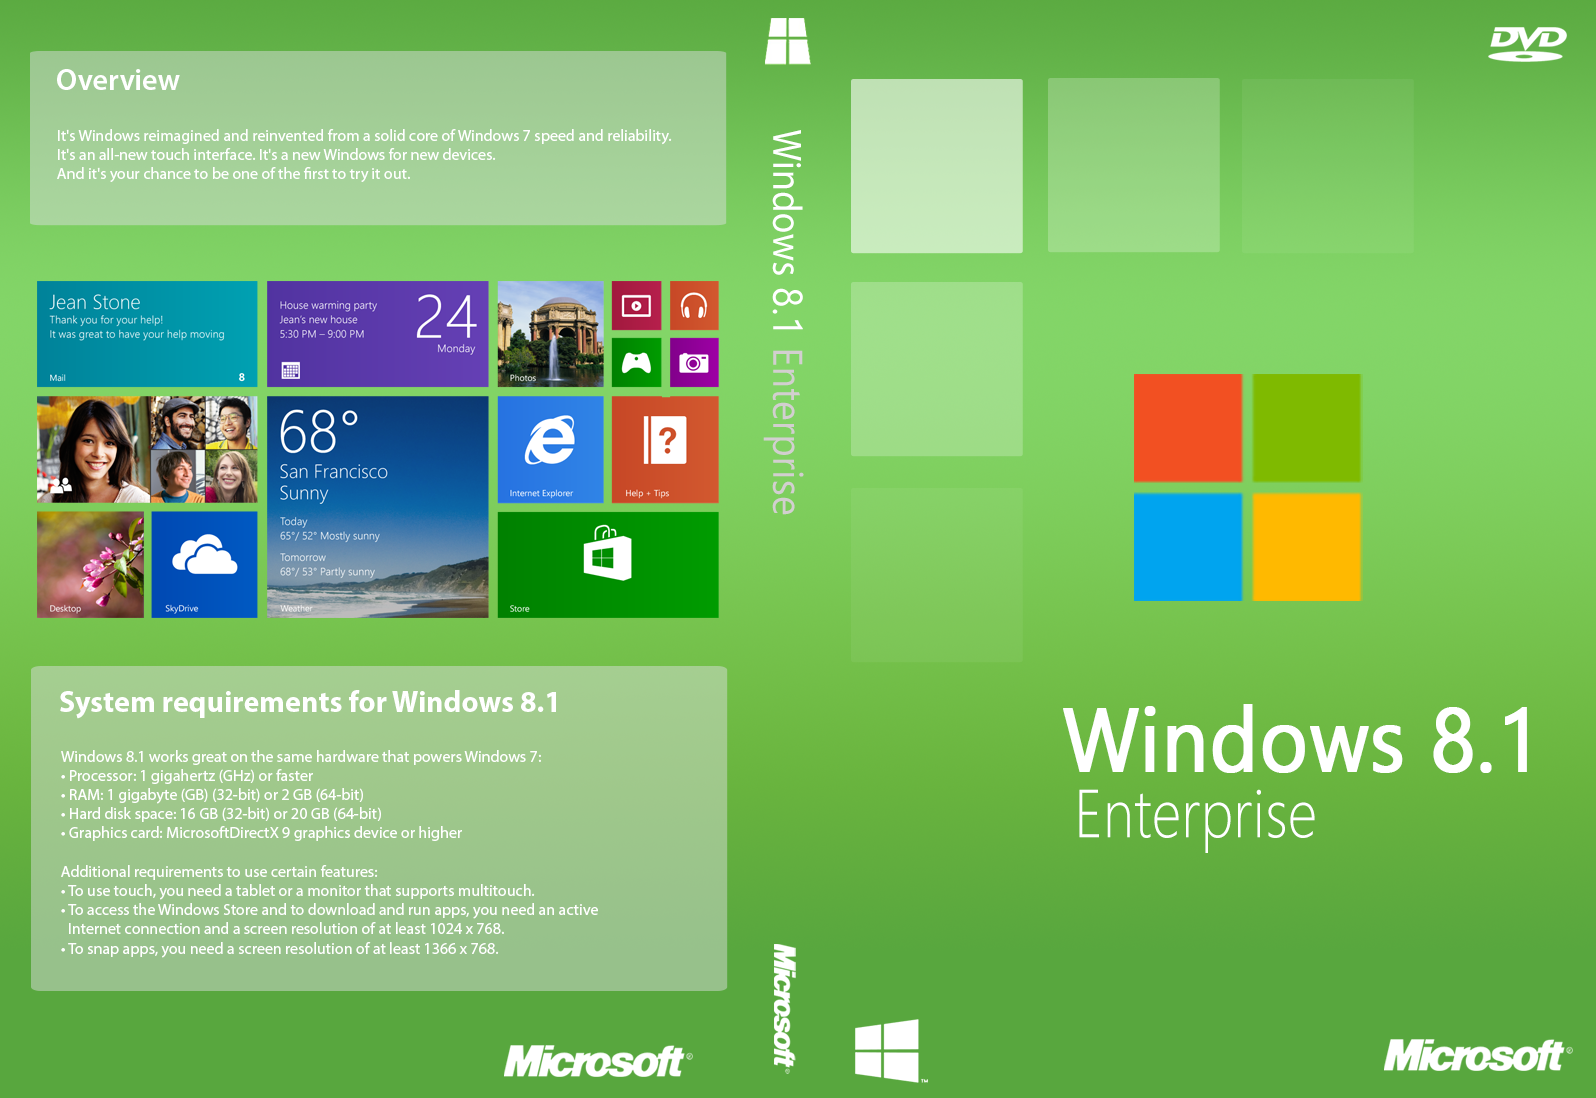 windows 8.1 enterprise download iso 64 bit with crack